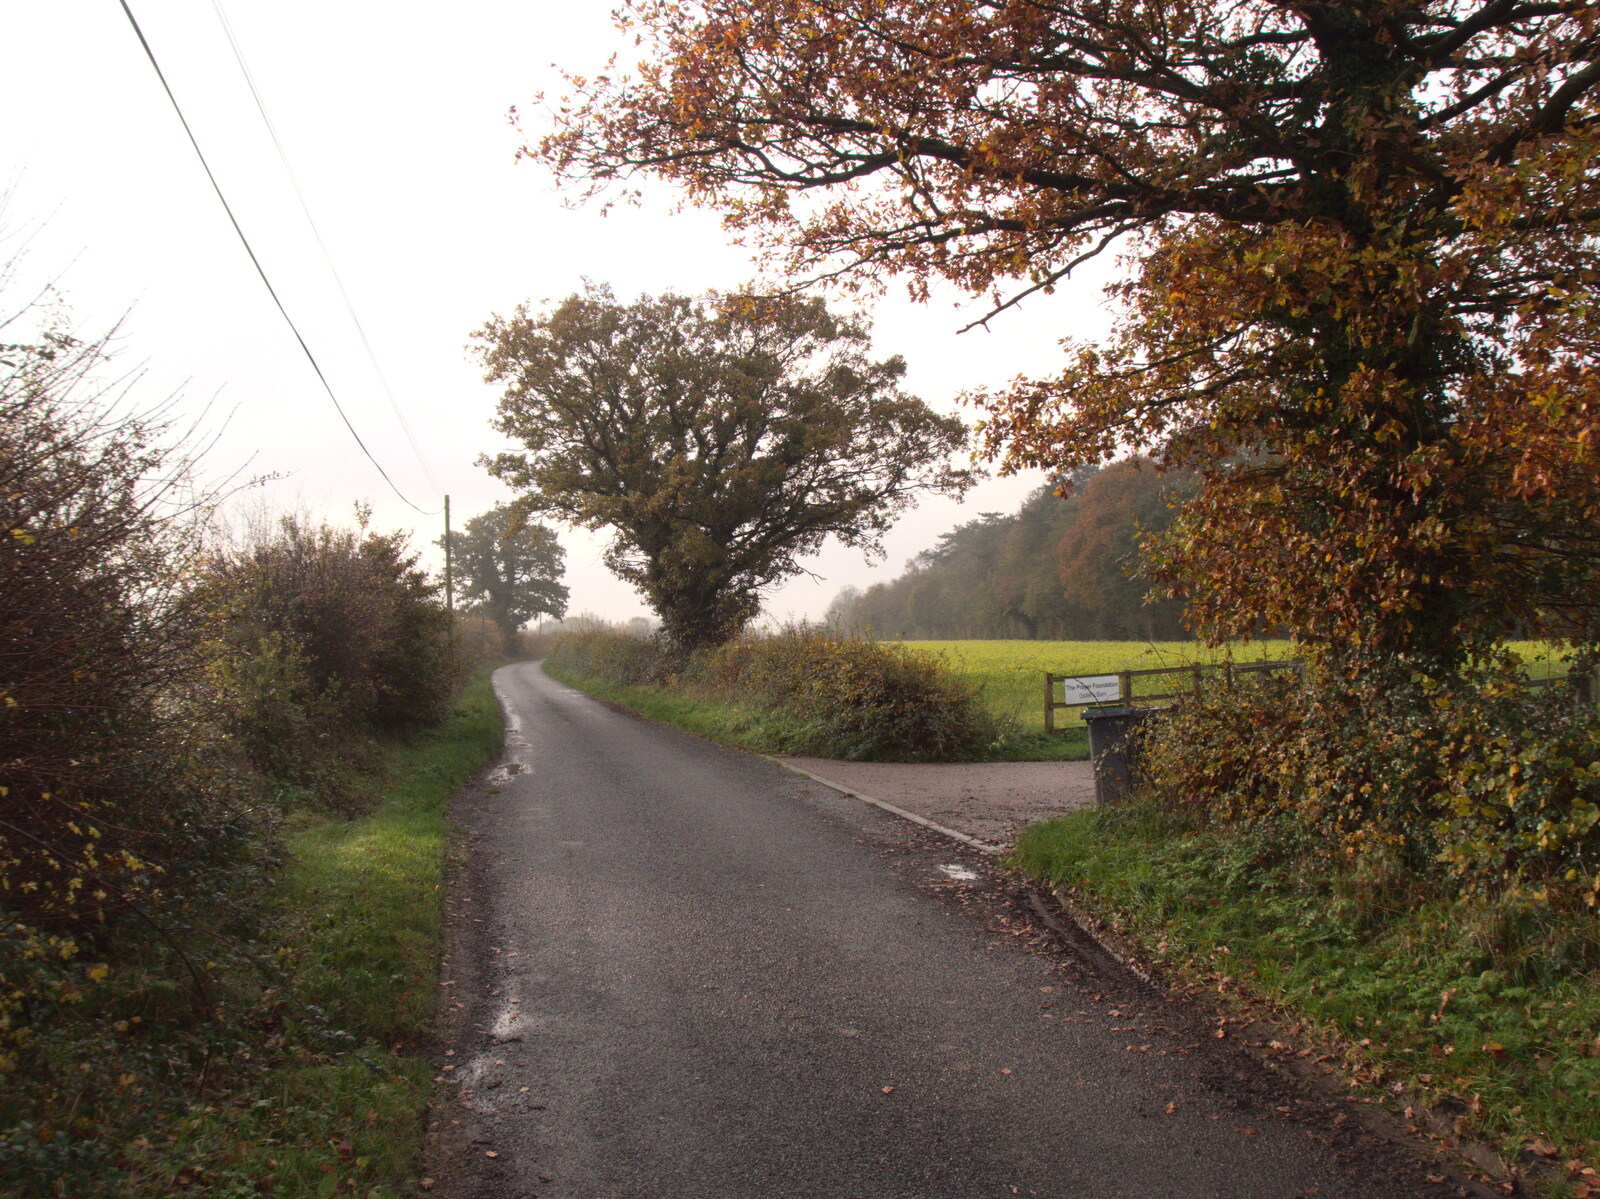 An autumnal road near Ostler's Barn from Pre-Lockdown in Station 119, Eye, Suffolk - 4th November 2020